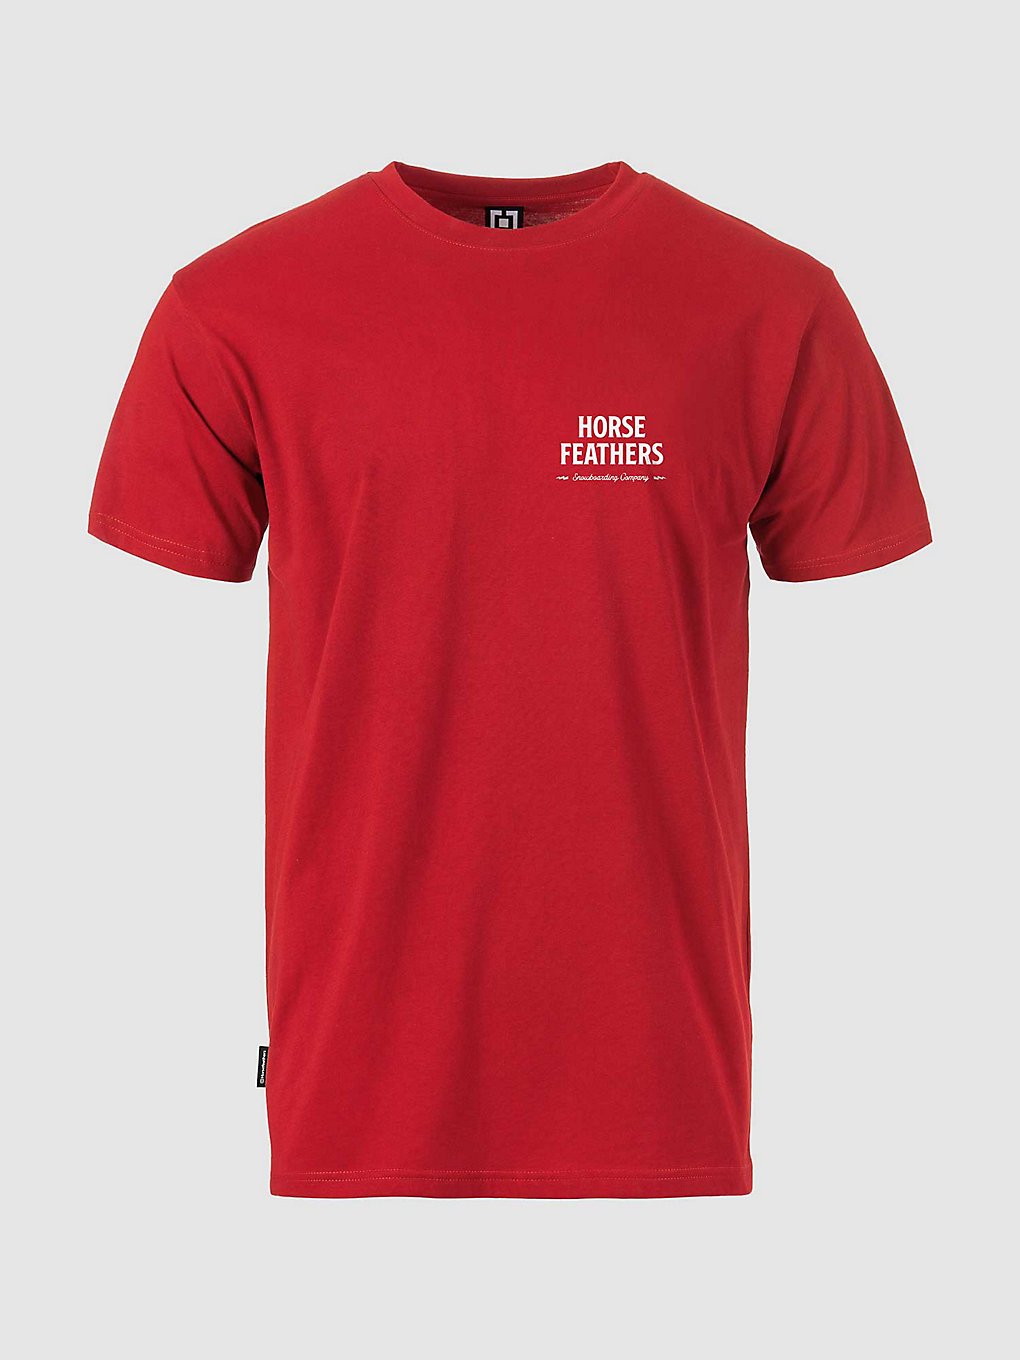 Horsefeathers Mountain Skull T-Shirt true red kaufen